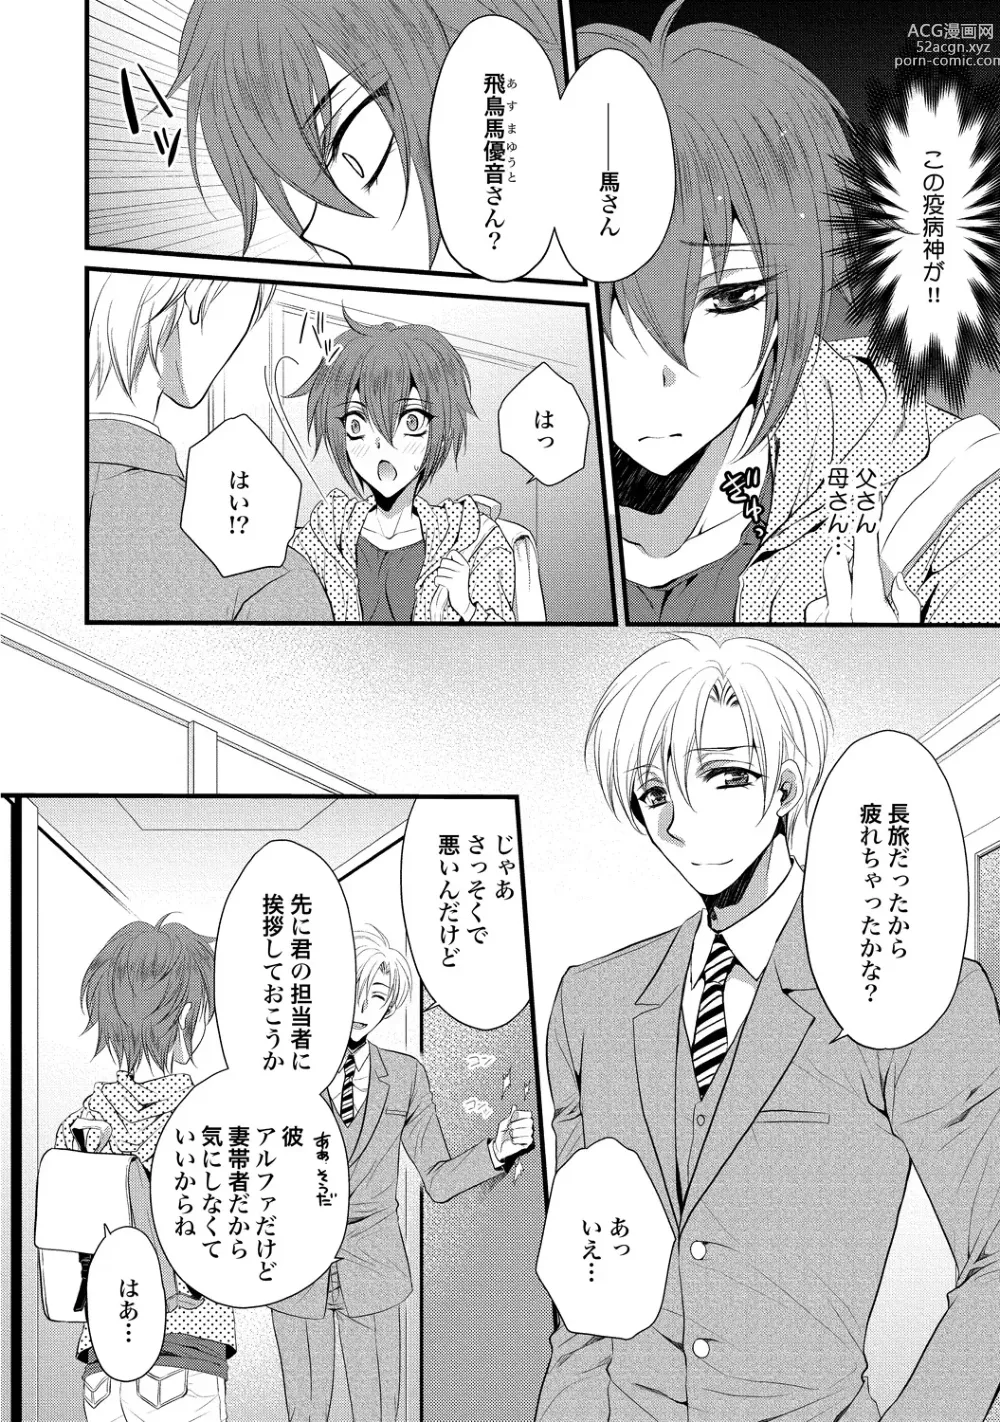 Page 12 of manga Zetsurin Do S na Alpha Counselor